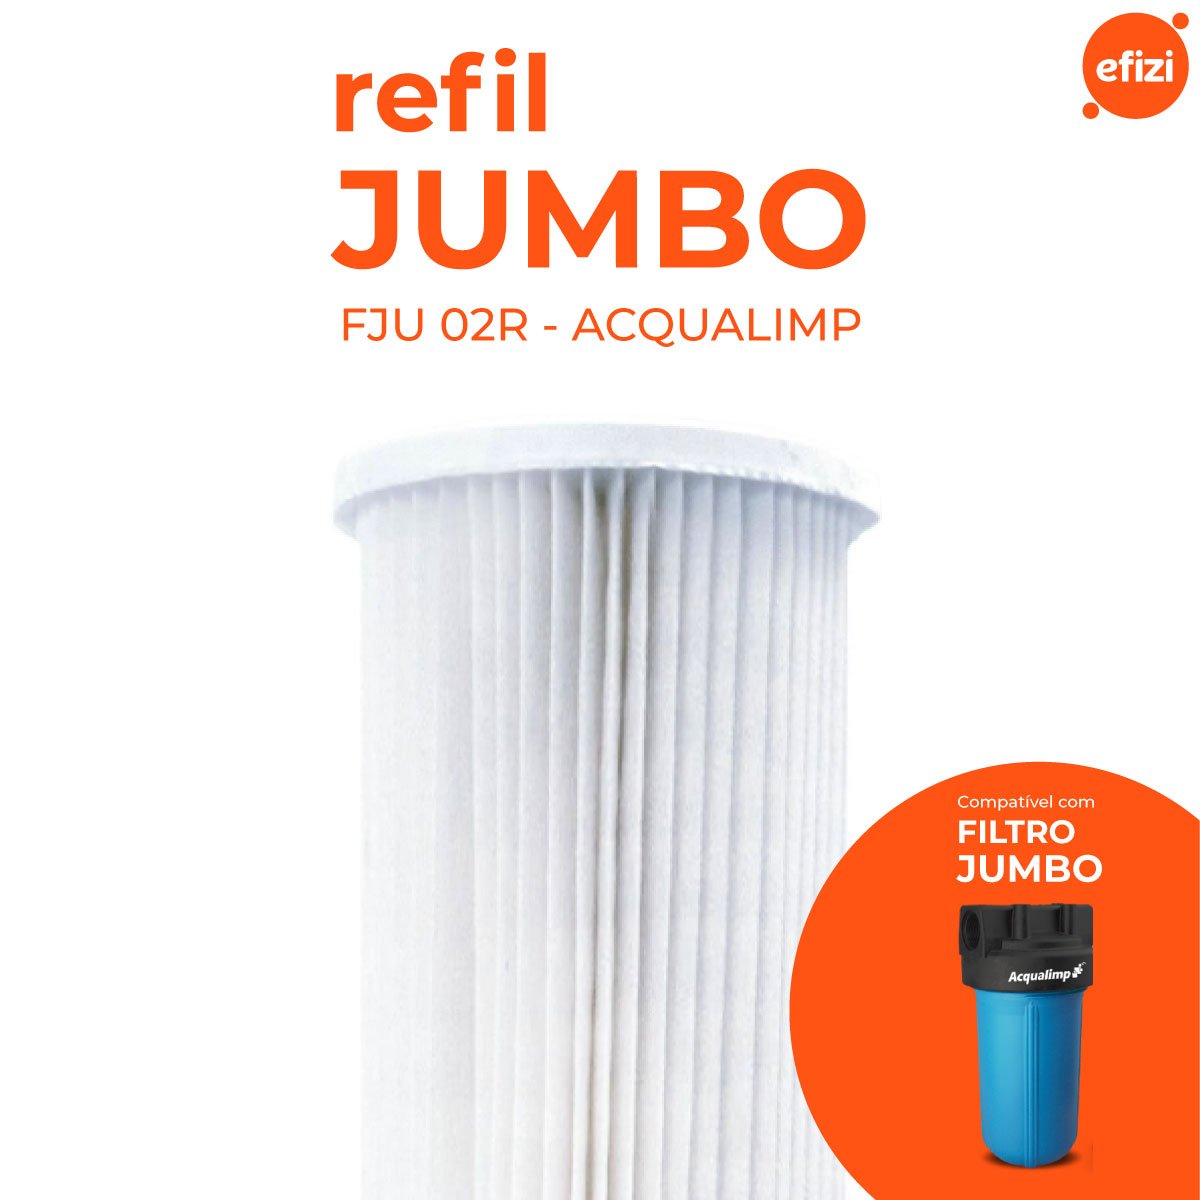 Refil Filtro Jumbo Fju 02r Acqualimp - 2